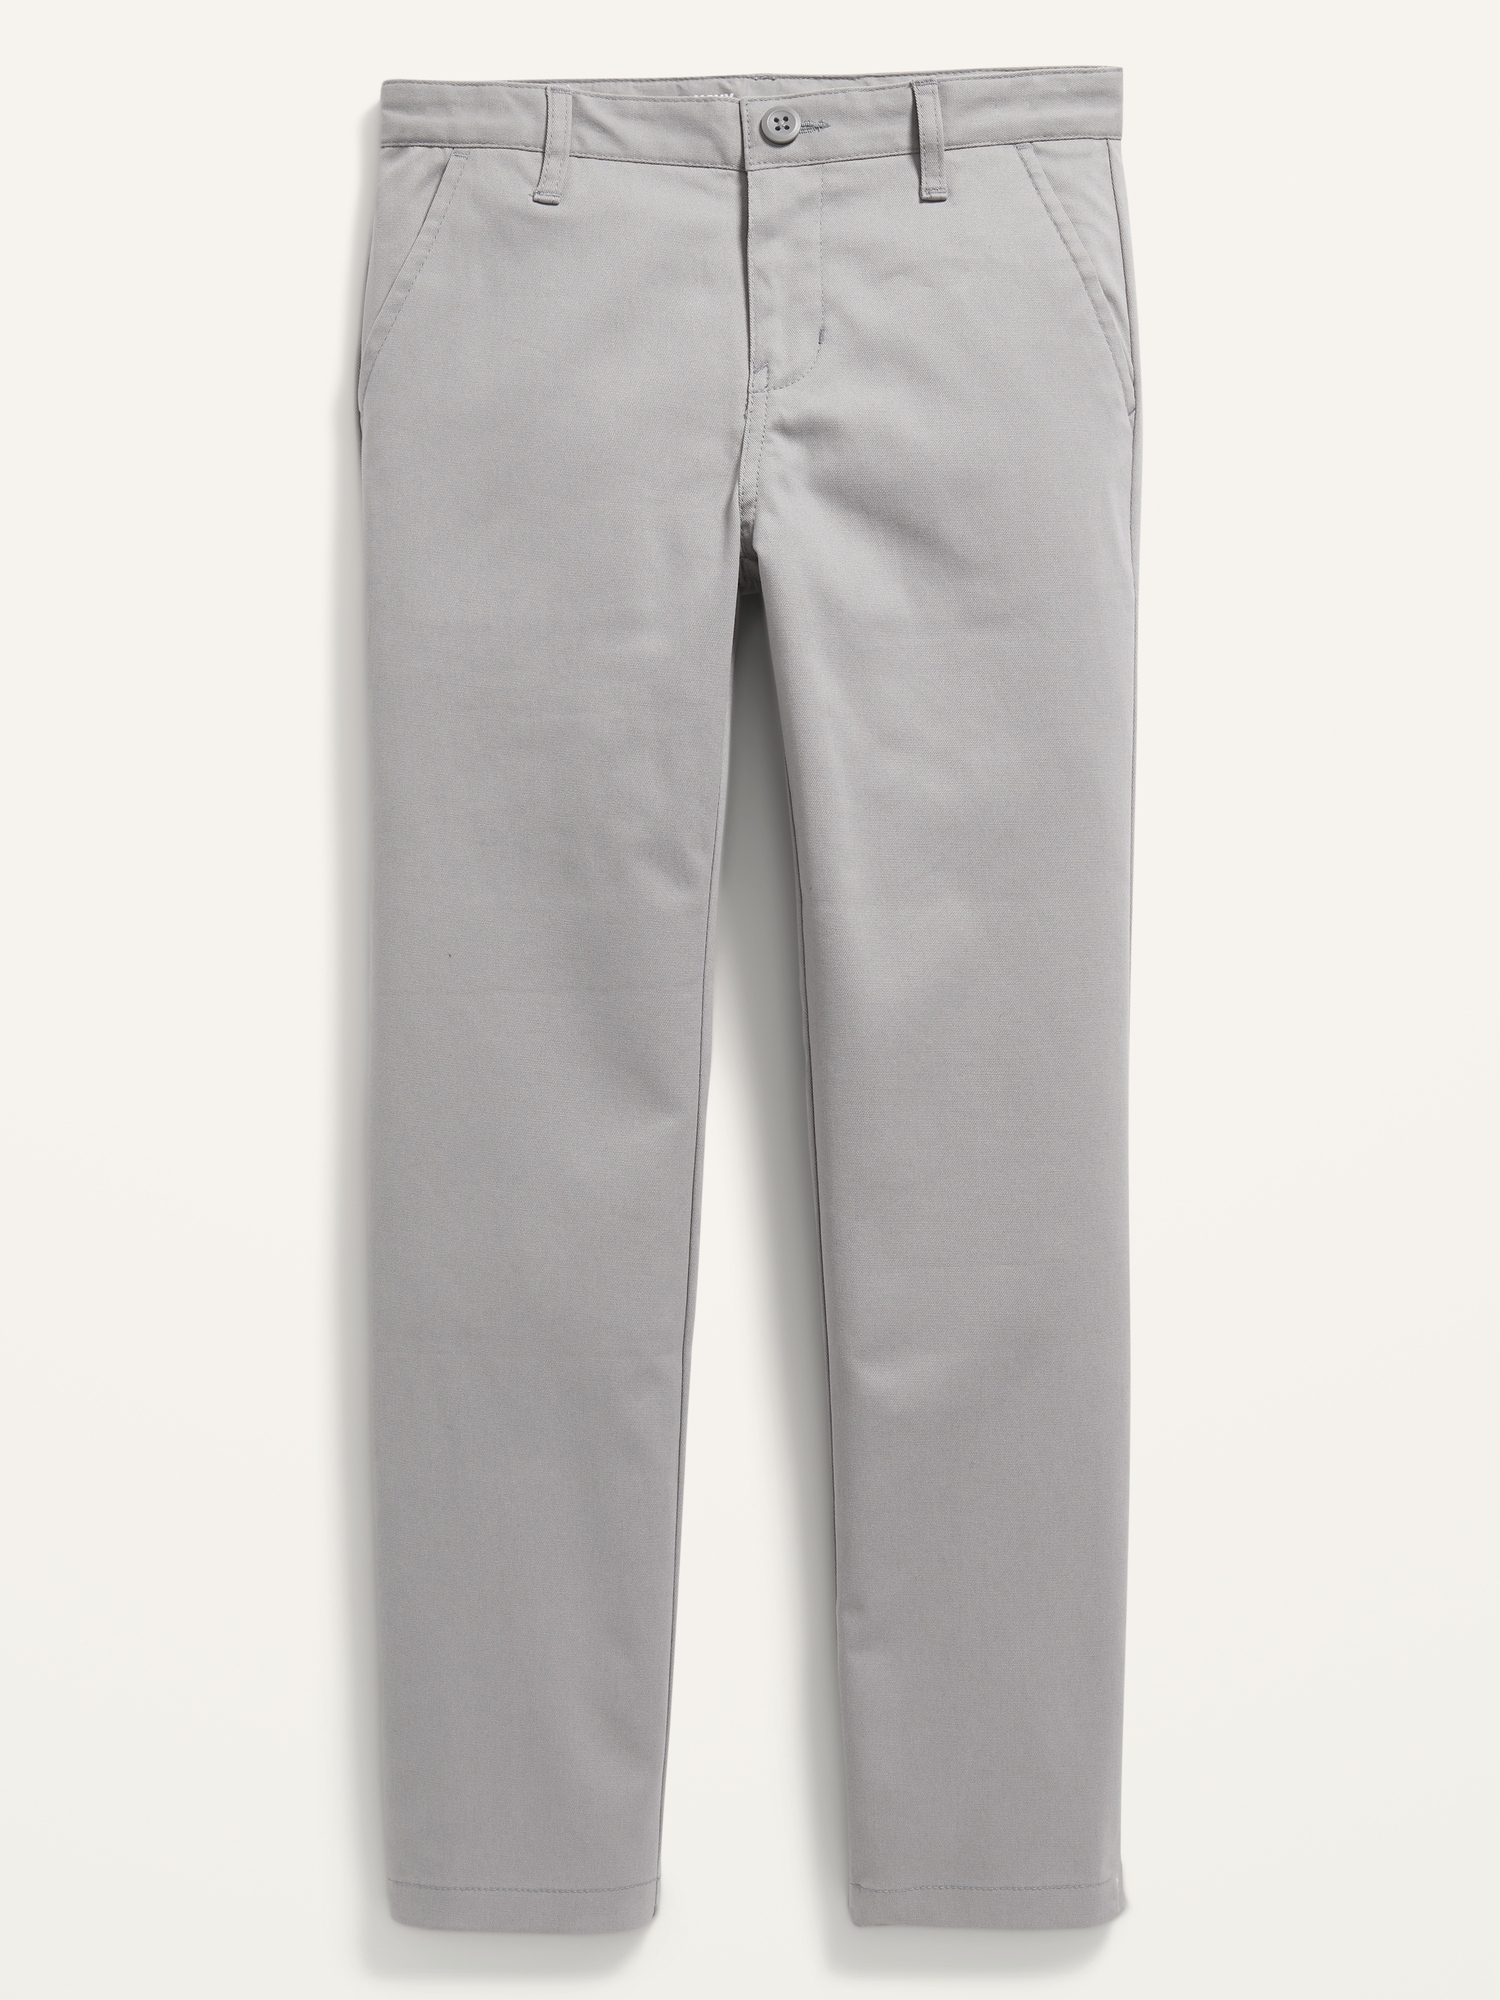 Straight Built-In Flex Uniform Pants for Boys